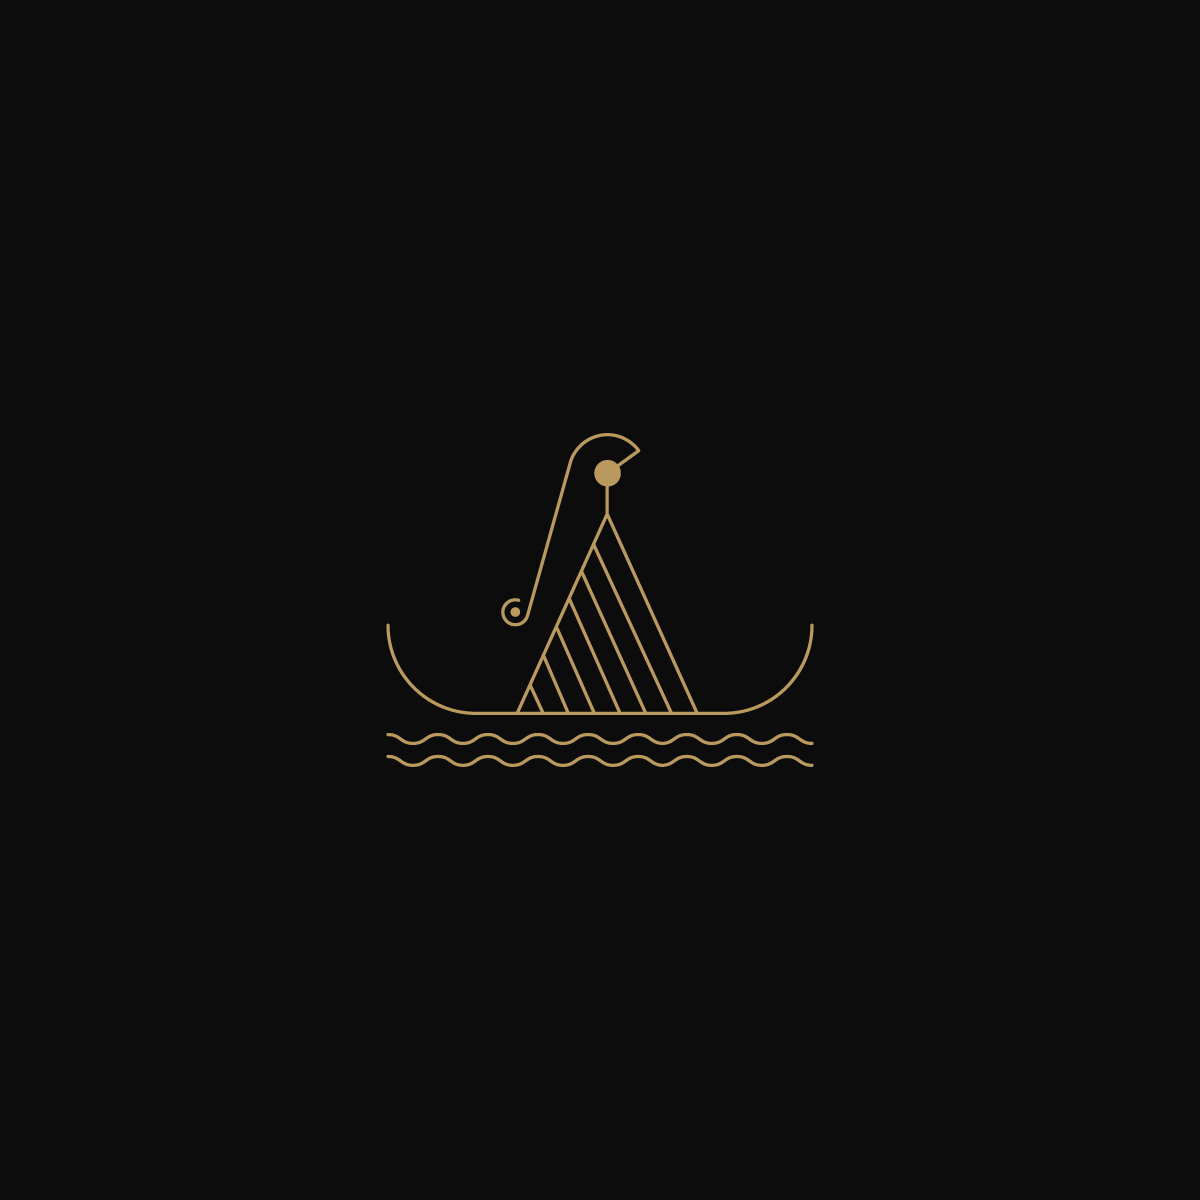 Ancient sound dark black gold music echo minimal icons pictograms